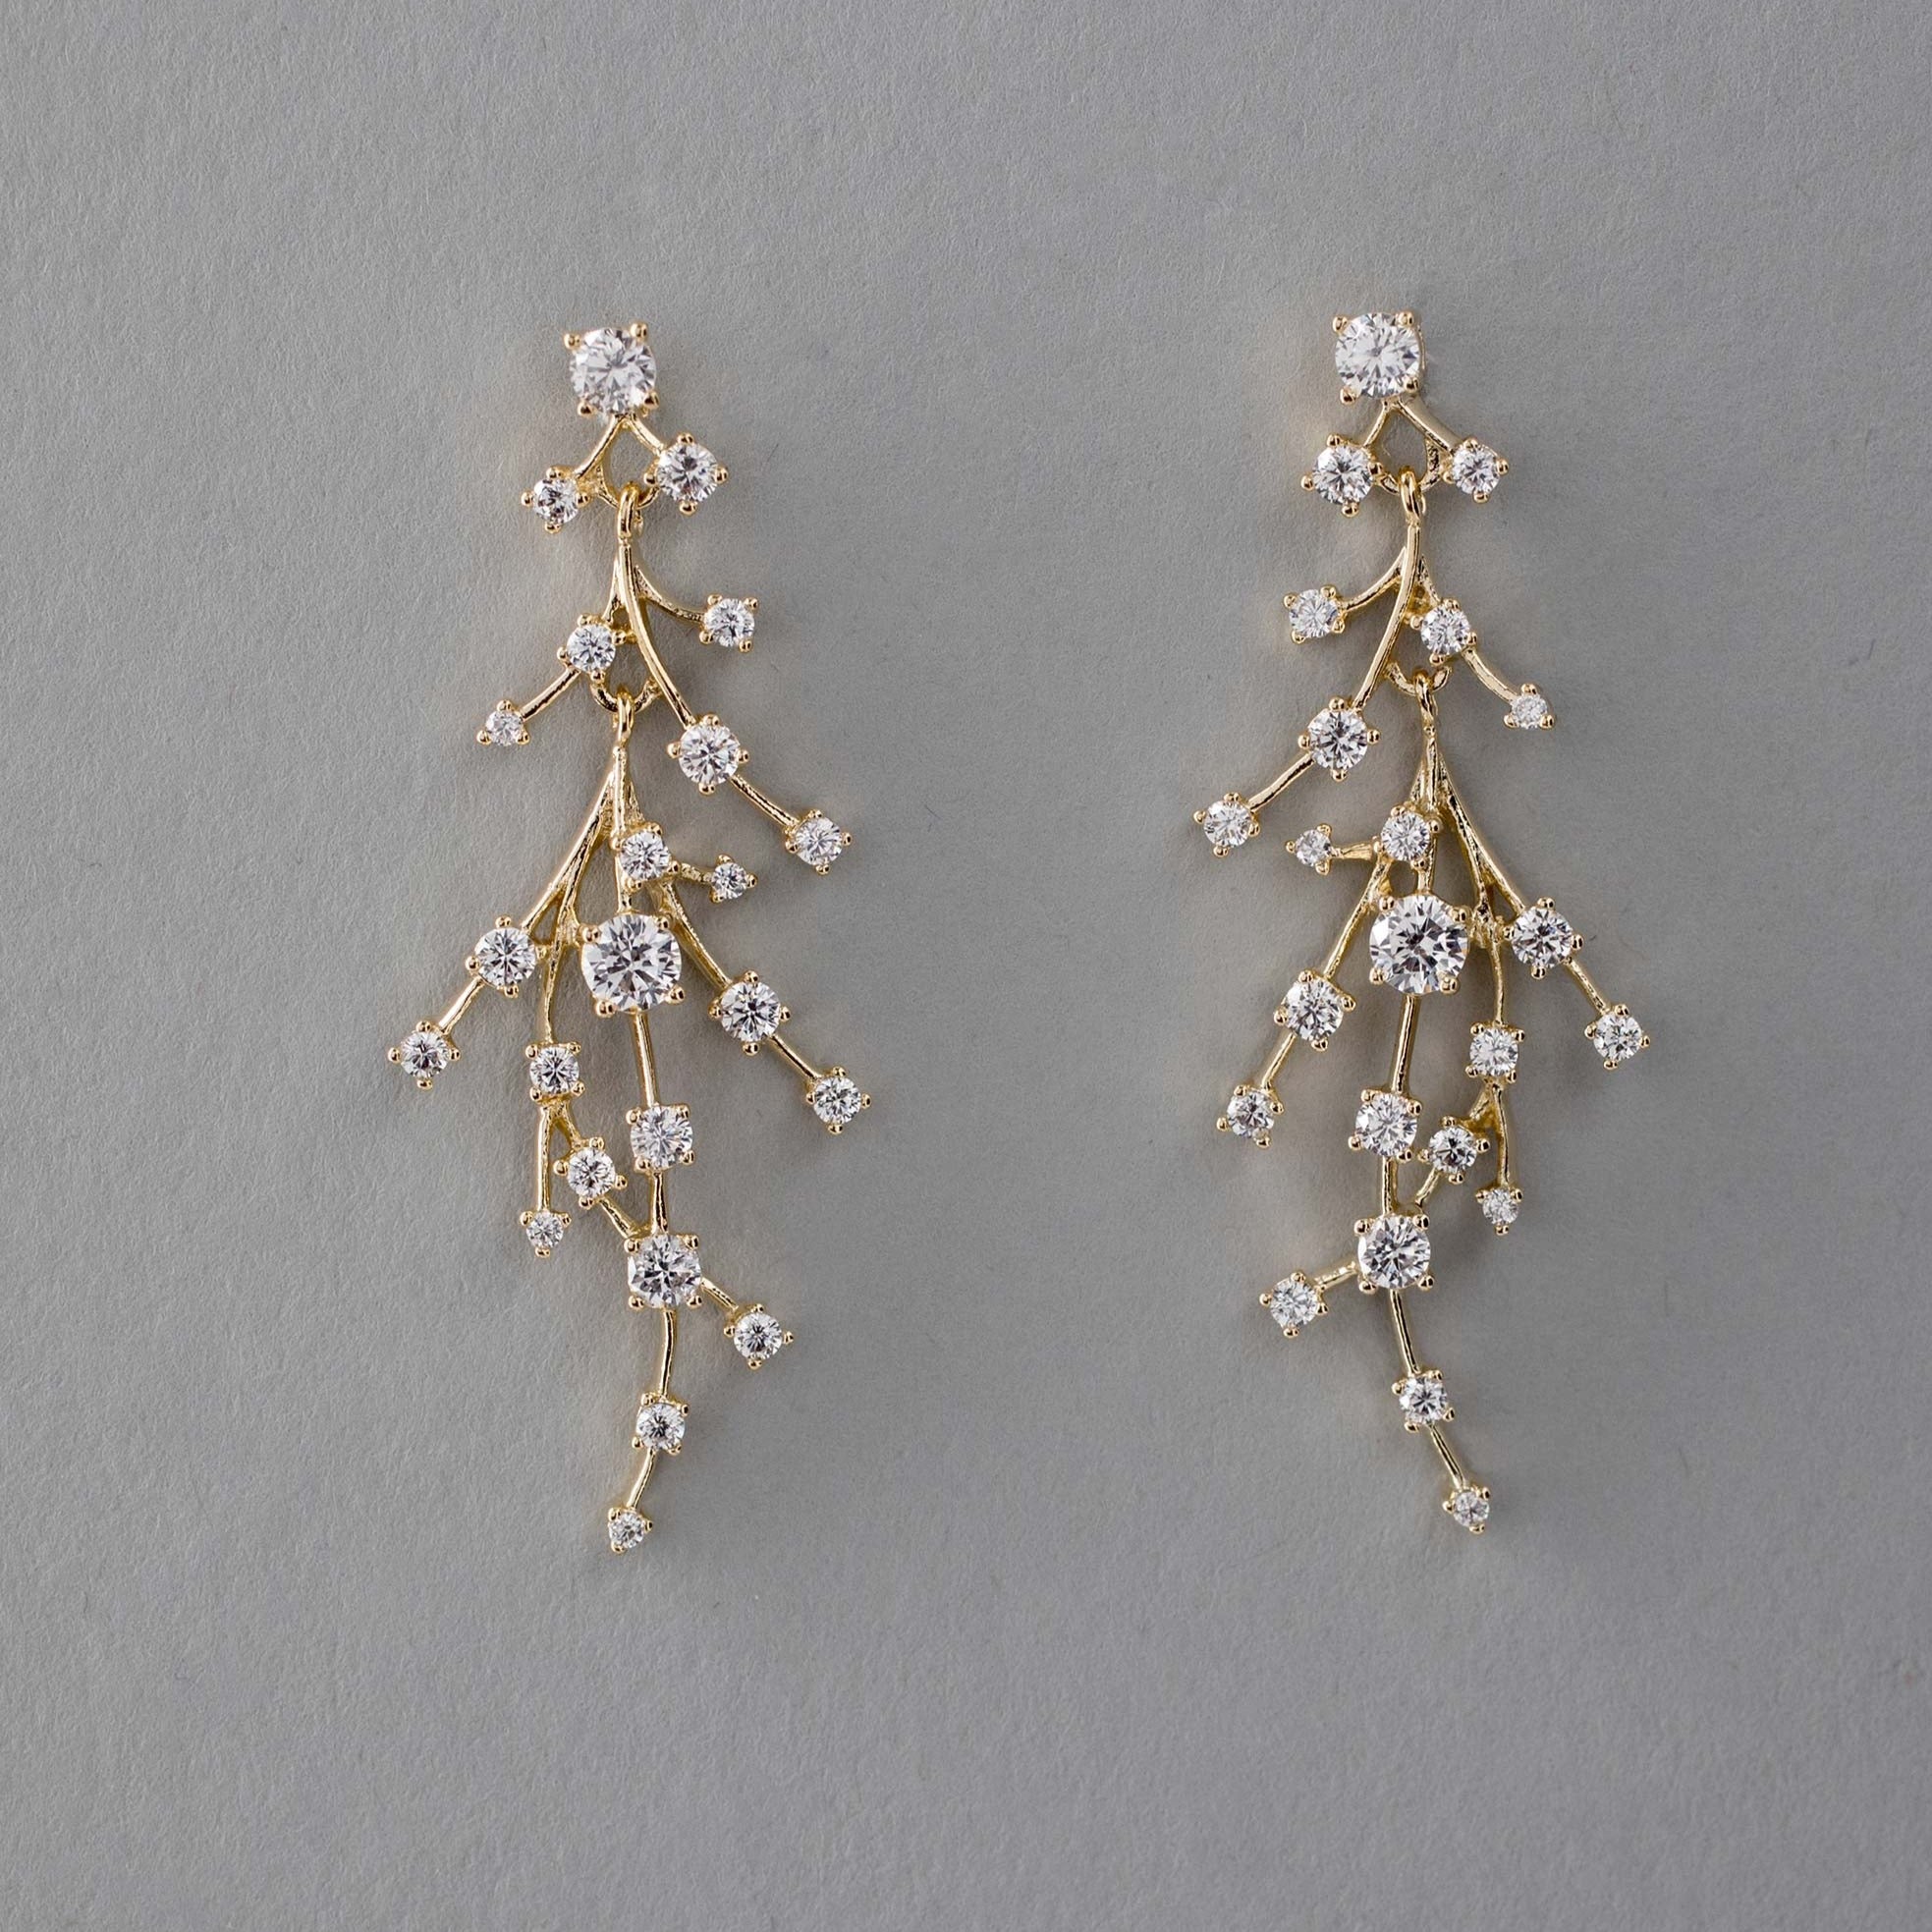 CZ, Crystal and Rhinestone Earrings